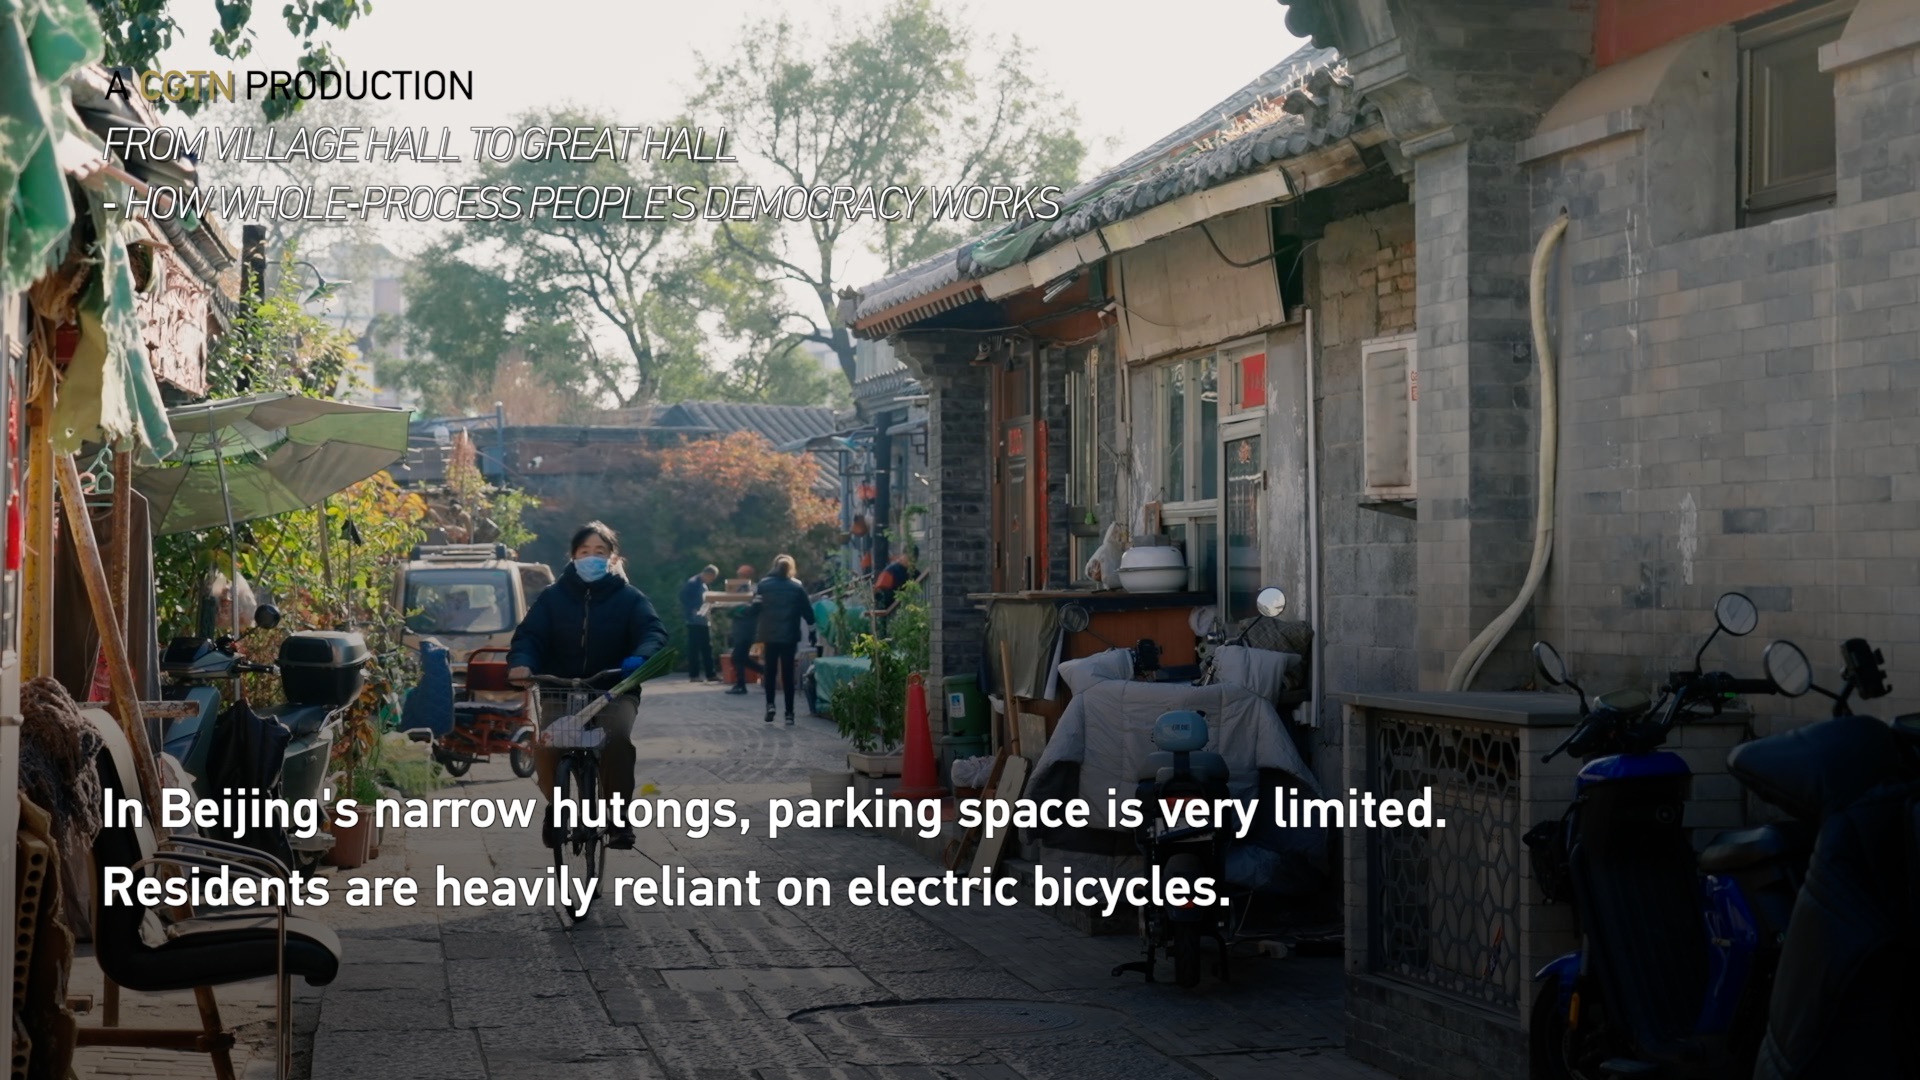 Every inch counts in Beijing's narrow hutongs. /CGTN